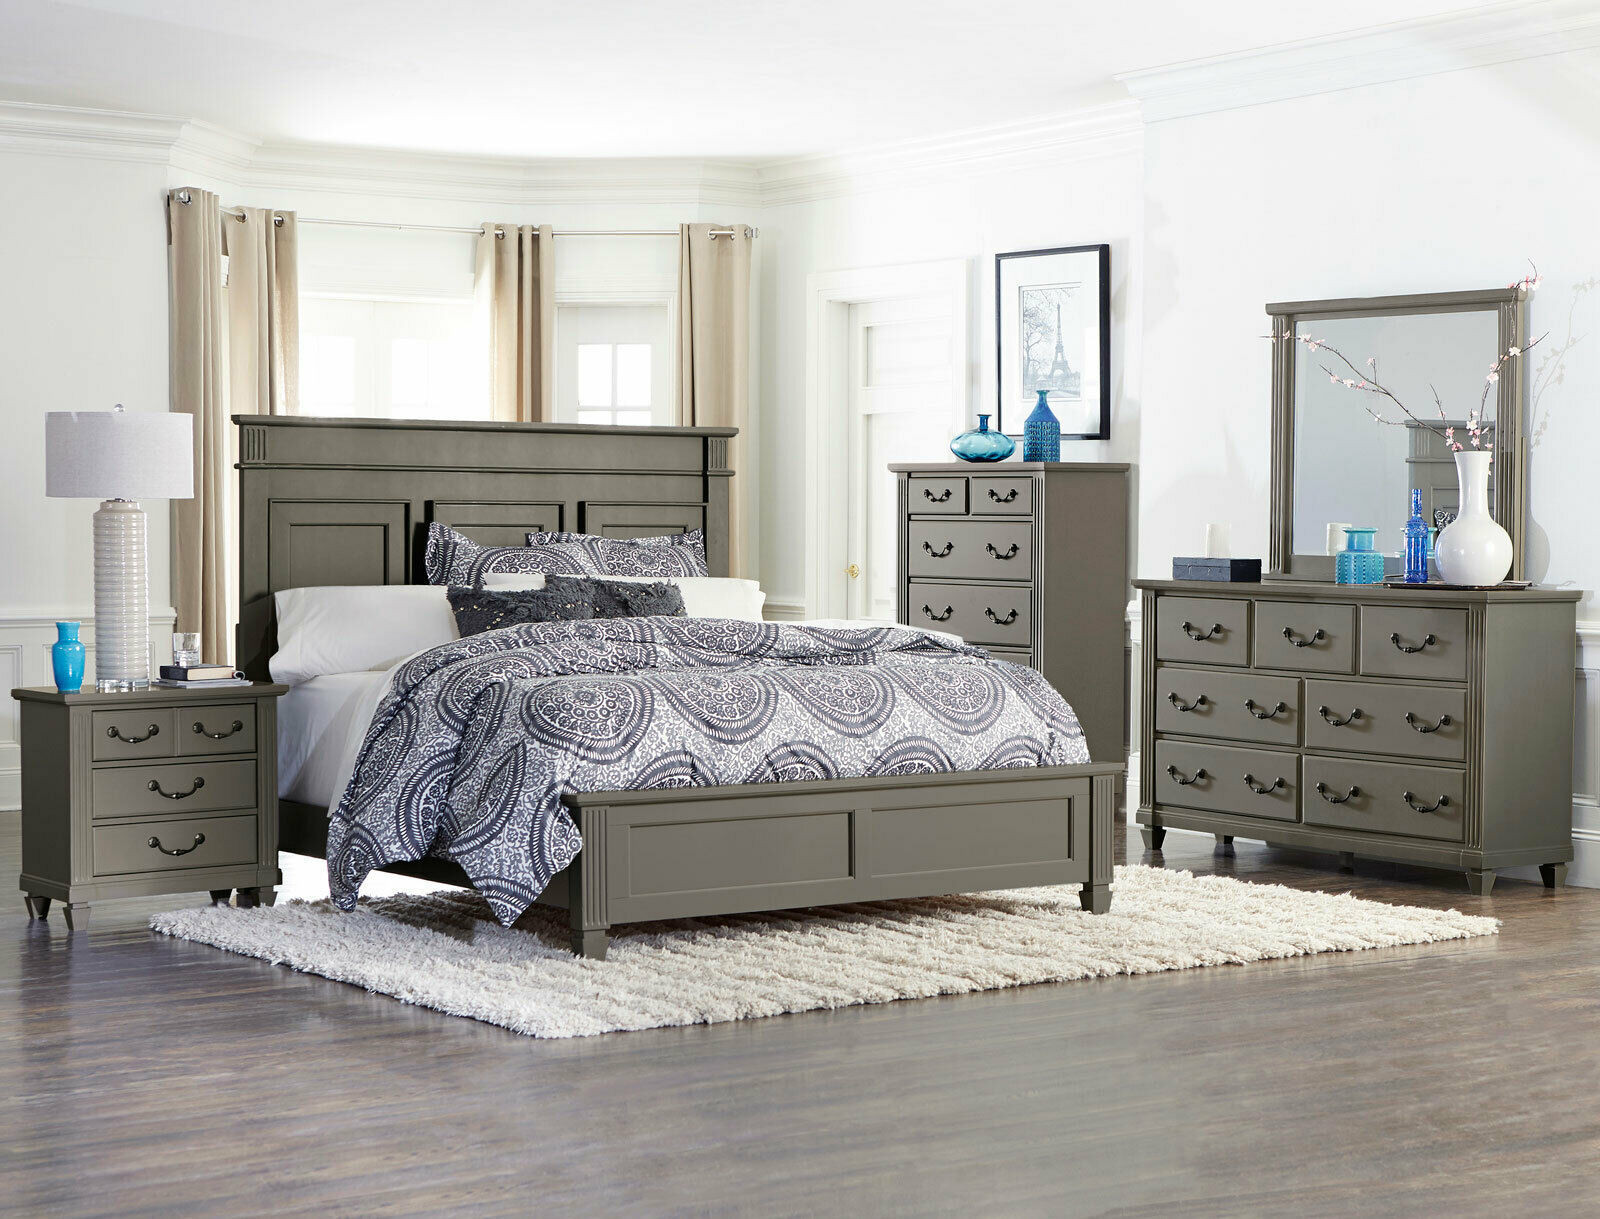 Master Bedroom Sets King
 Traditional Gray Wood Master Bedroom Suite Furniture